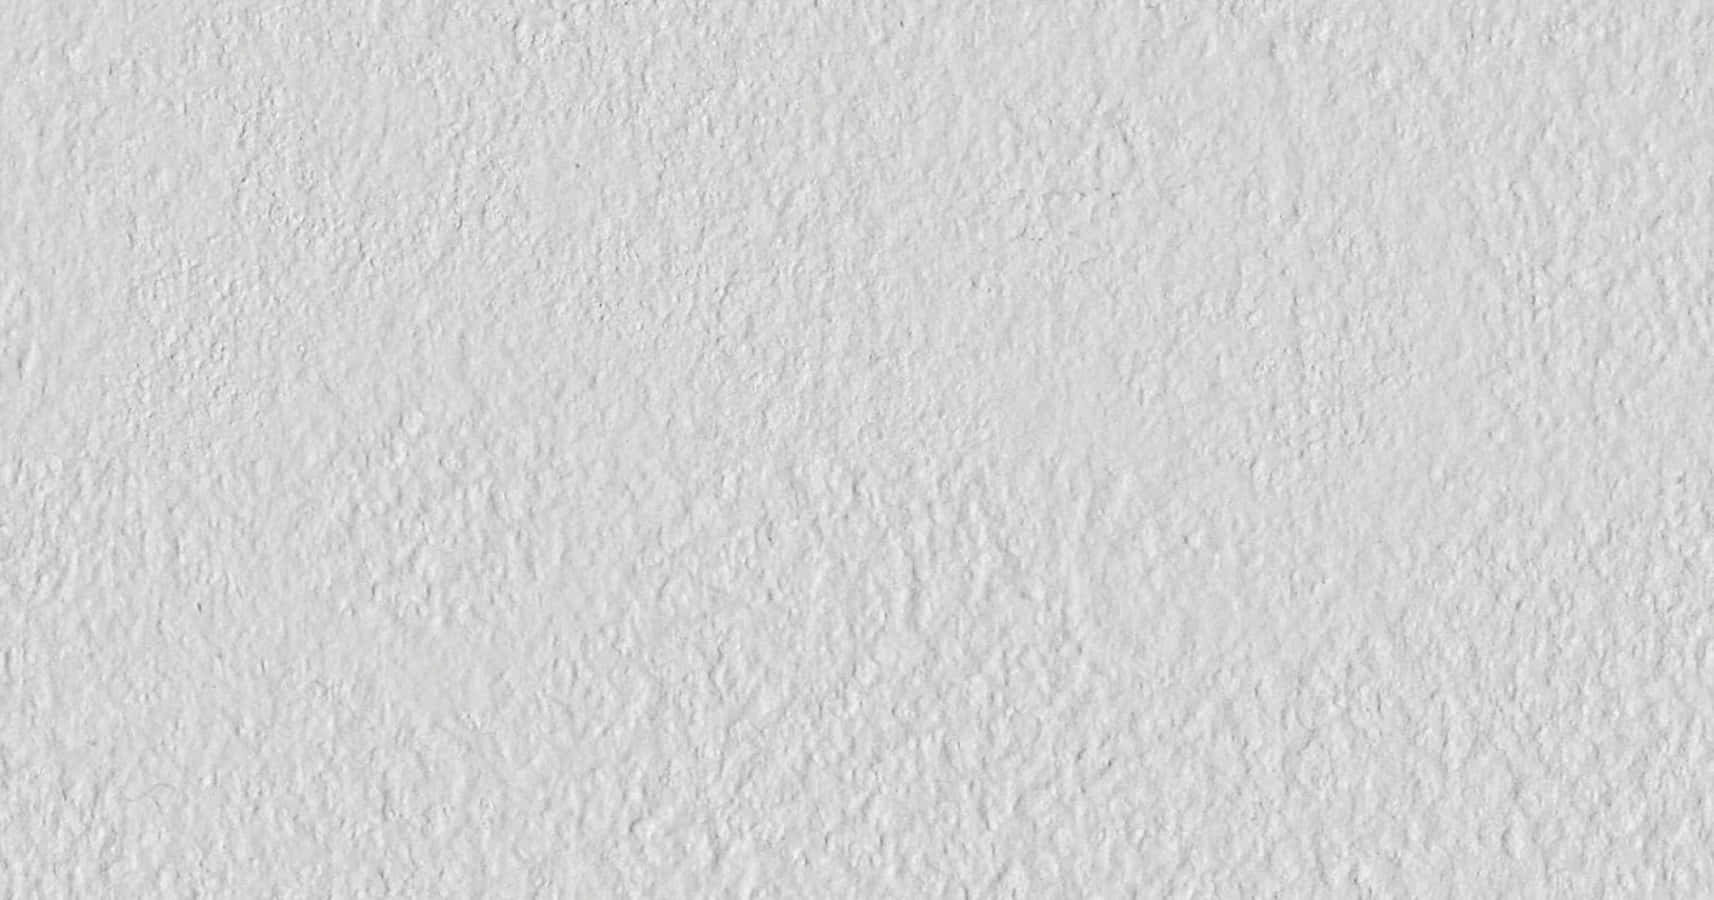 Immaginedi Un Muro Bianco In Stucco